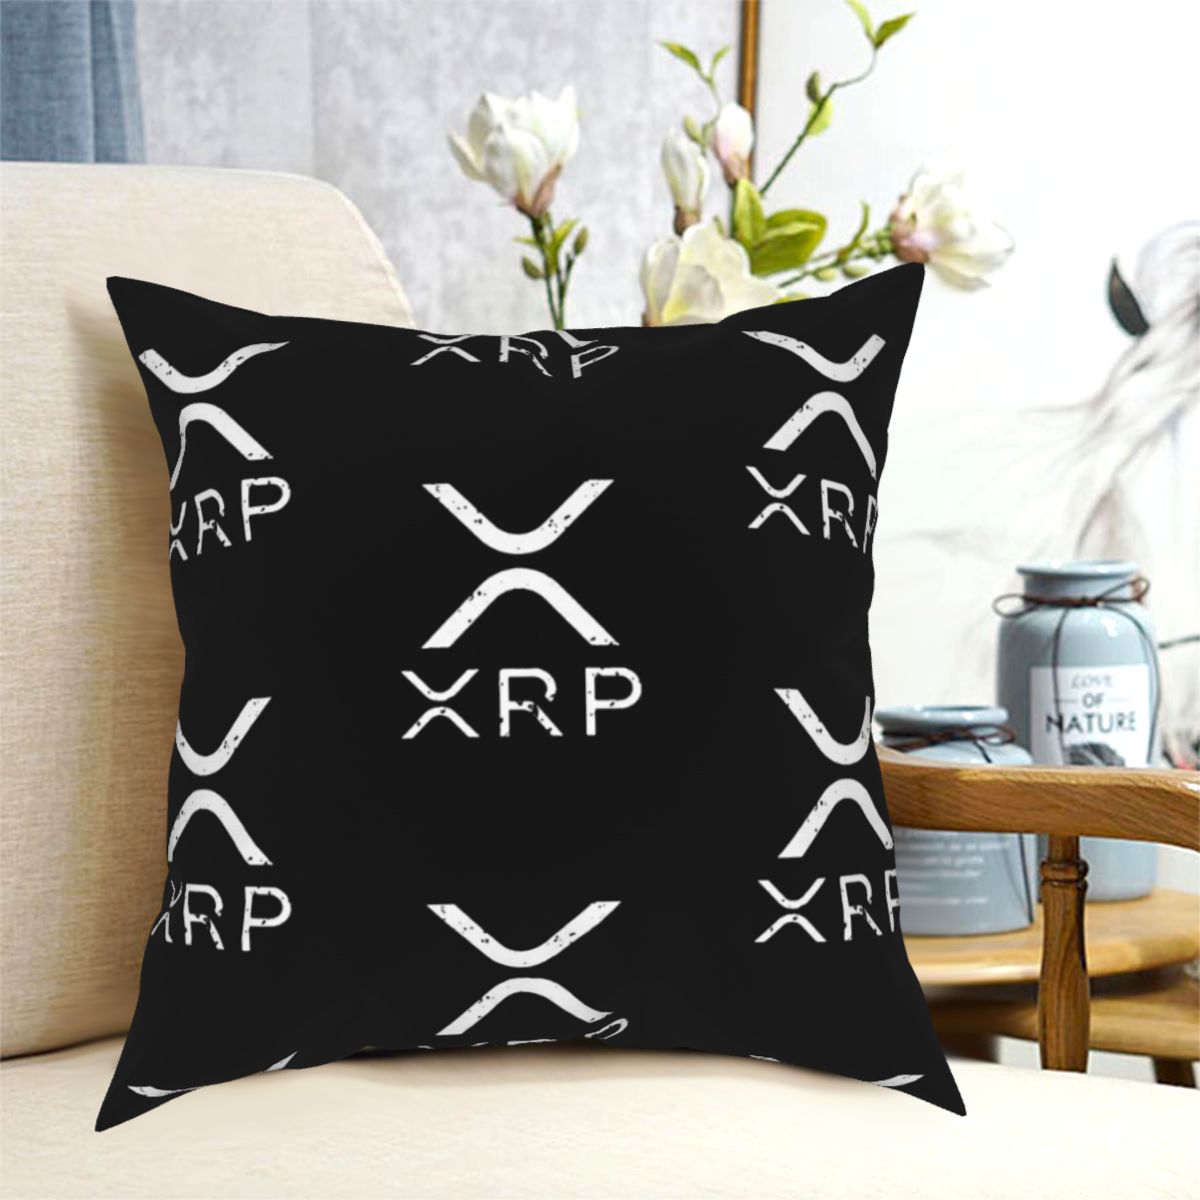 XRP Ripple pillowcase